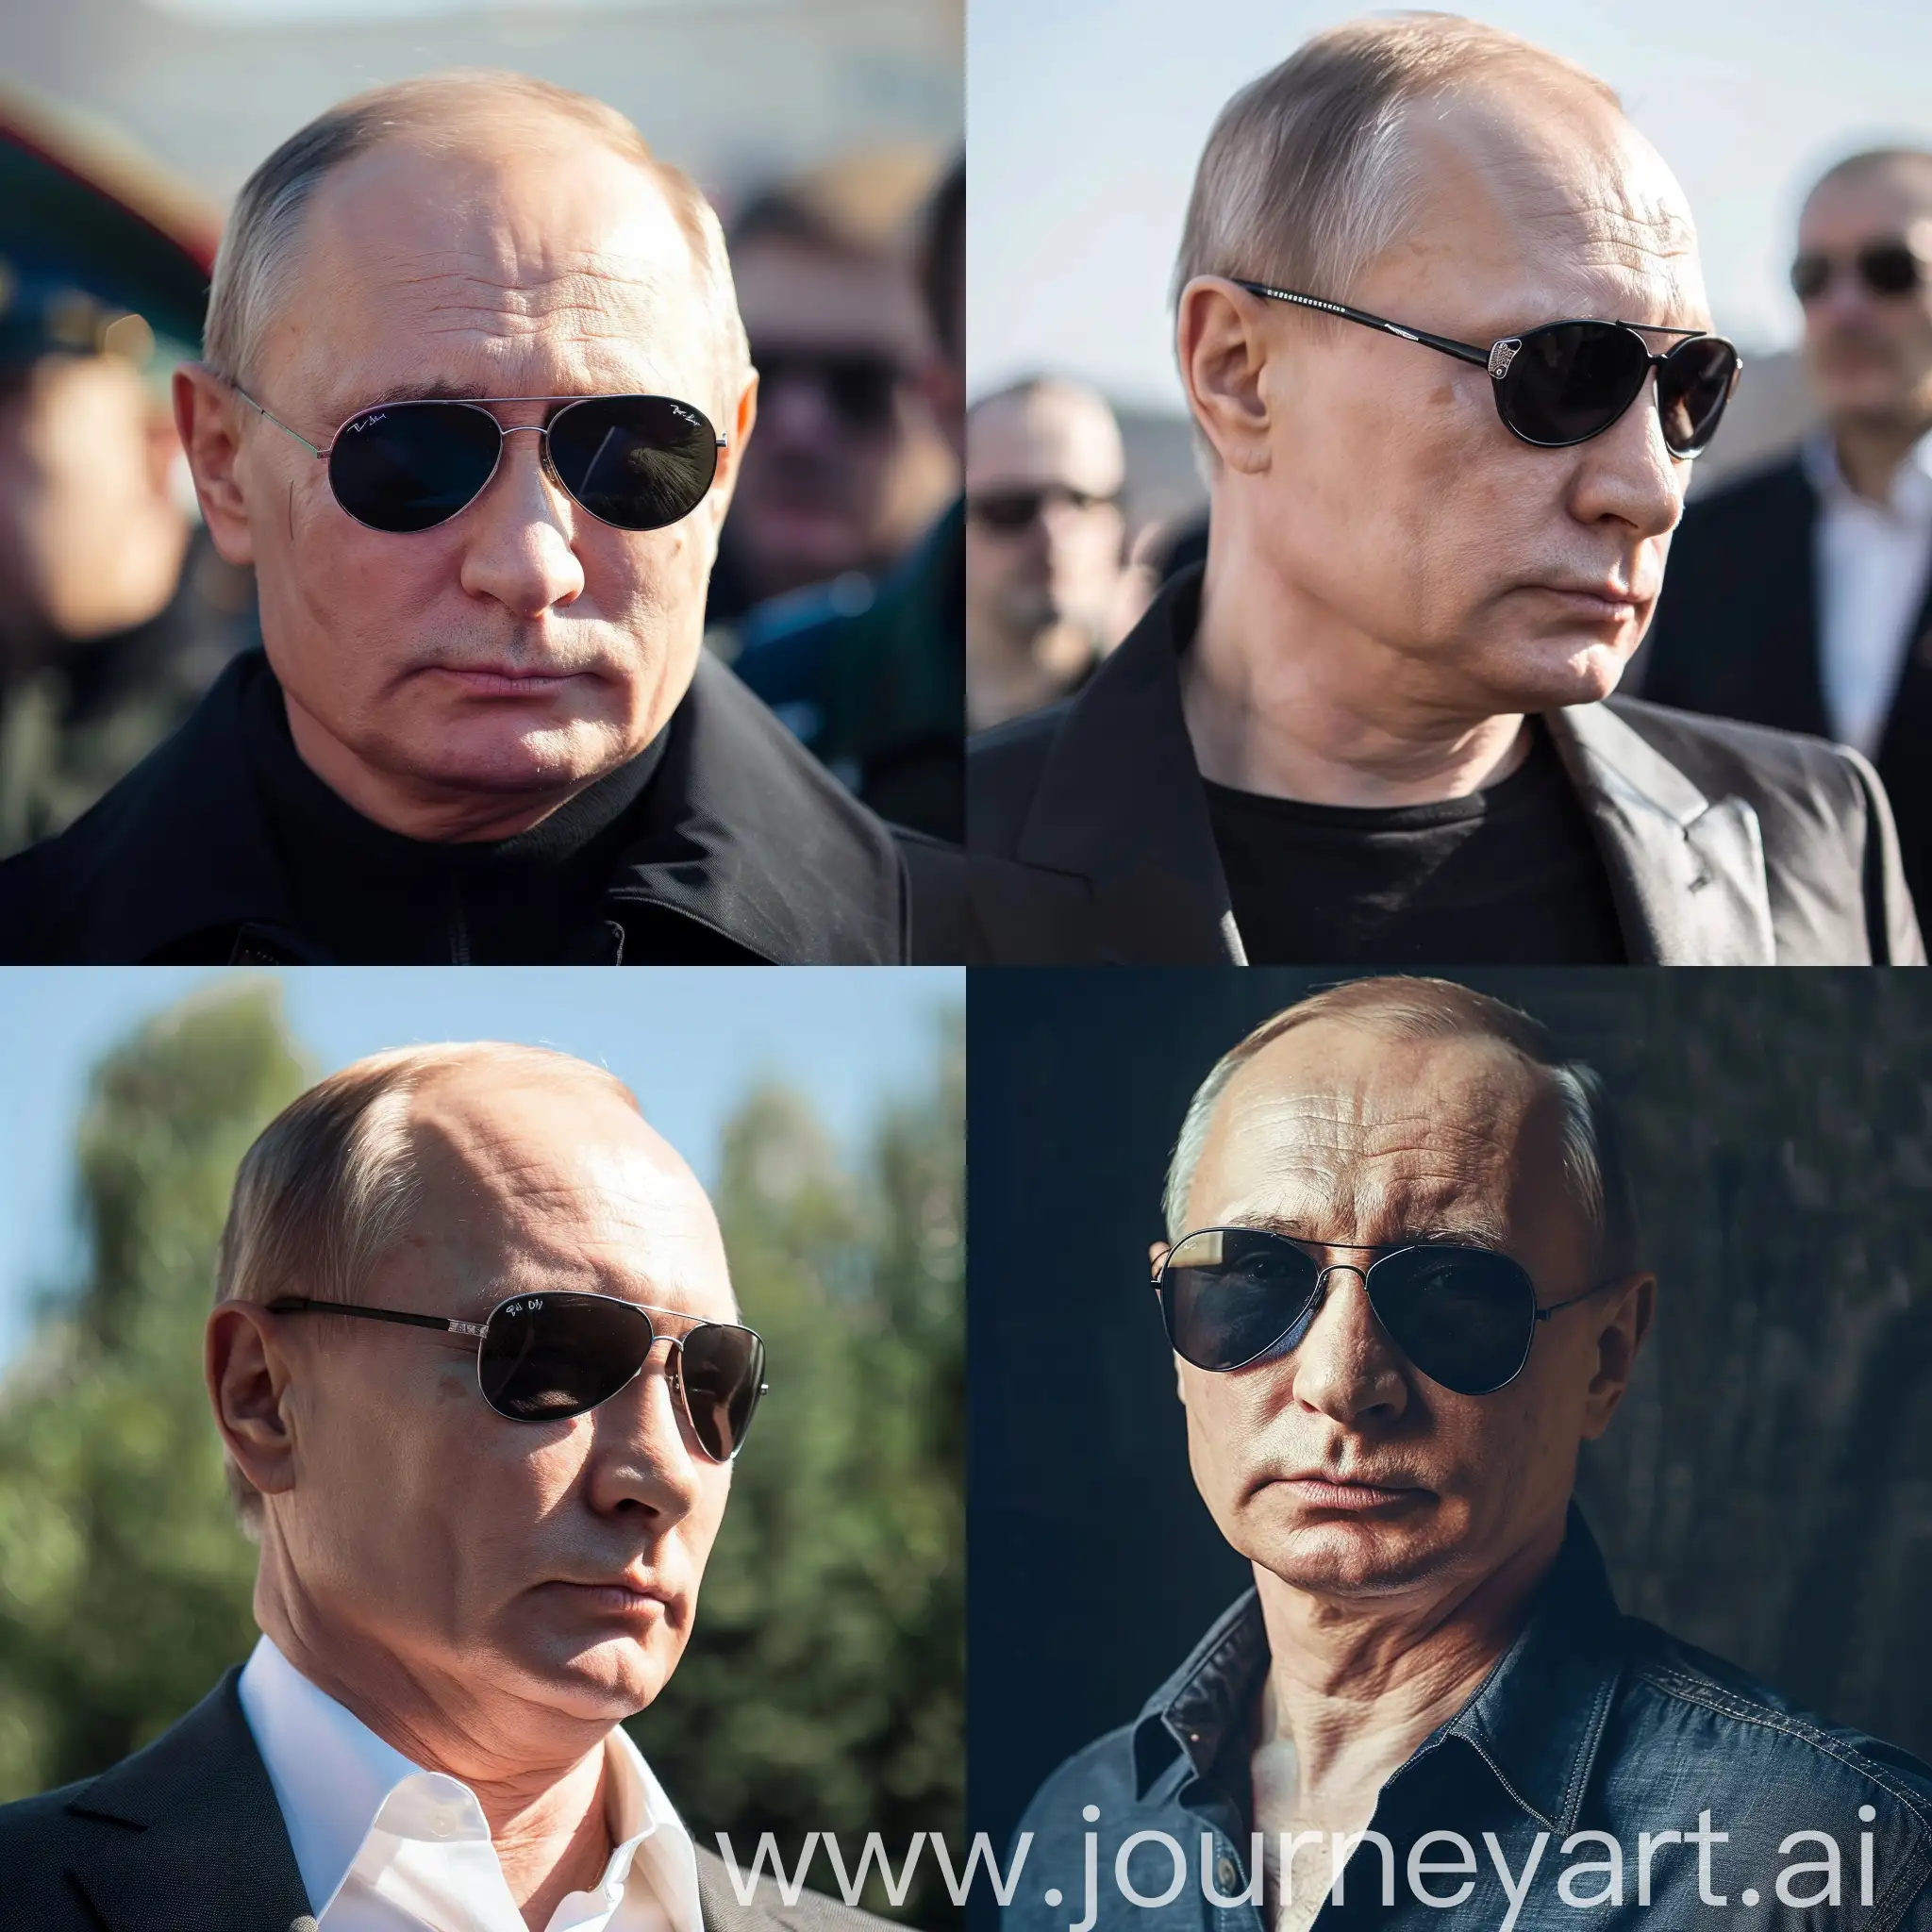 Vladimir-Putin-Portrait-BaldHeaded-Leader-with-Black-Sunglasses